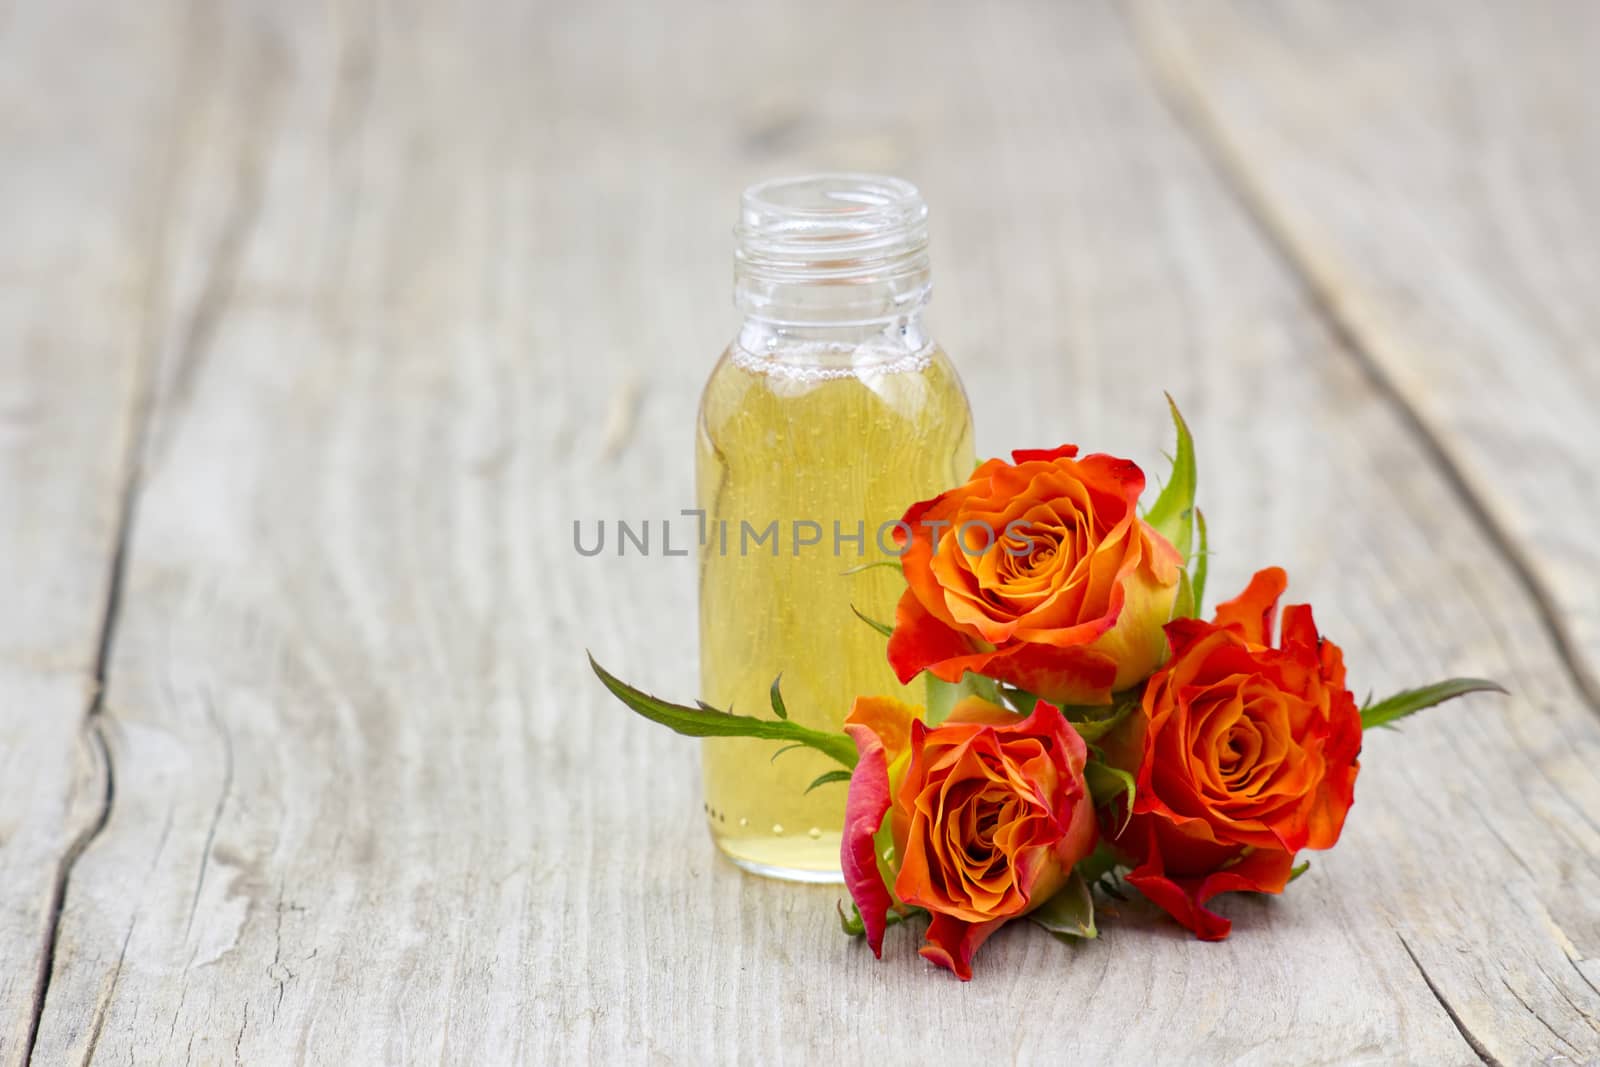 bath oil and orange roses by miradrozdowski